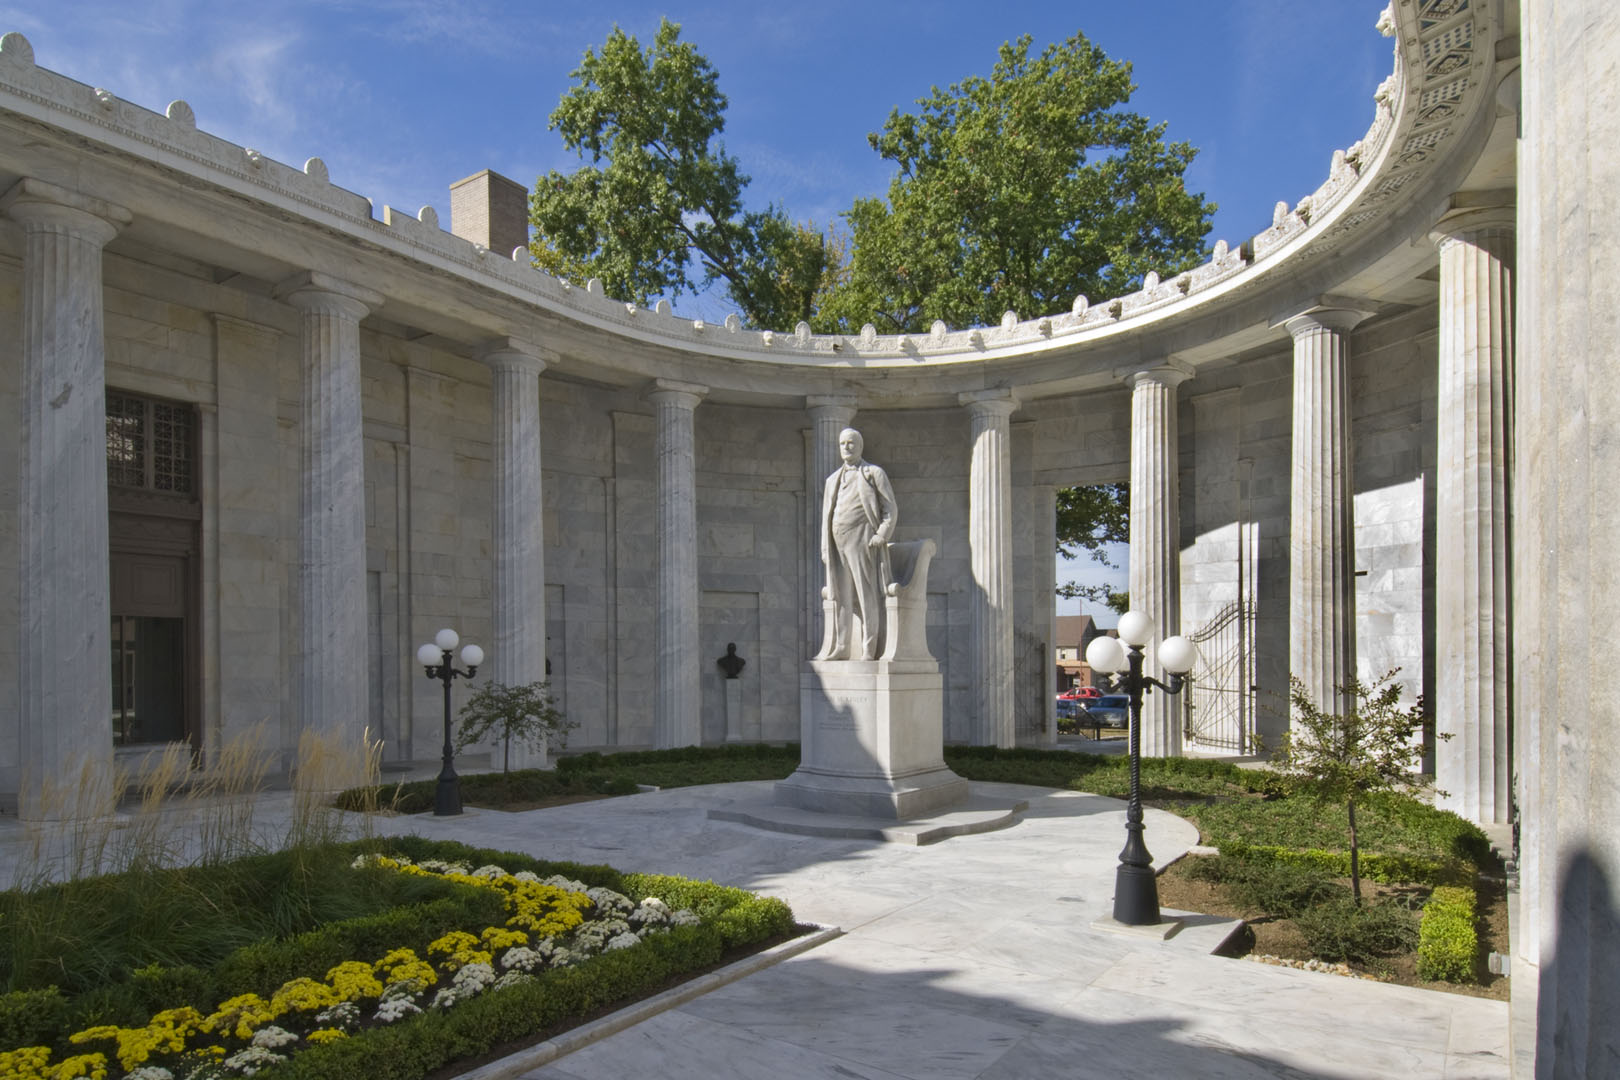 McKinley Memorial, Courtyard and colonnade